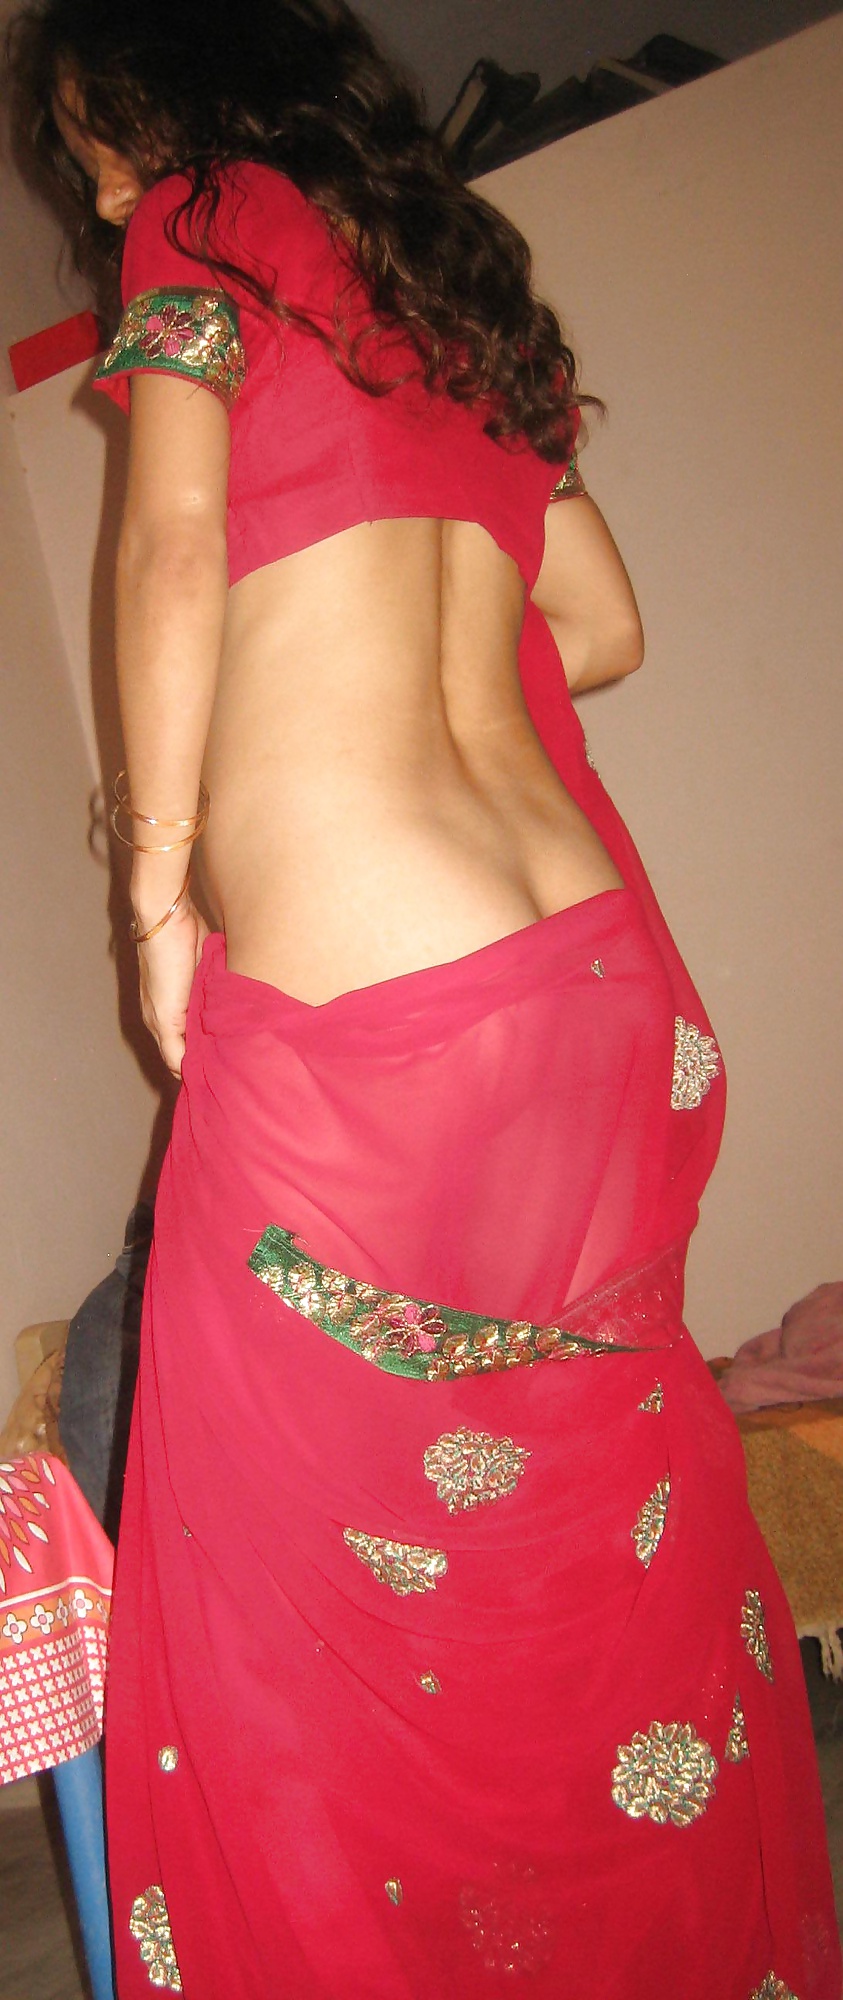 Geethanude - Indian Aunty Geeta Bhabhi Naked - Indian Girls Club